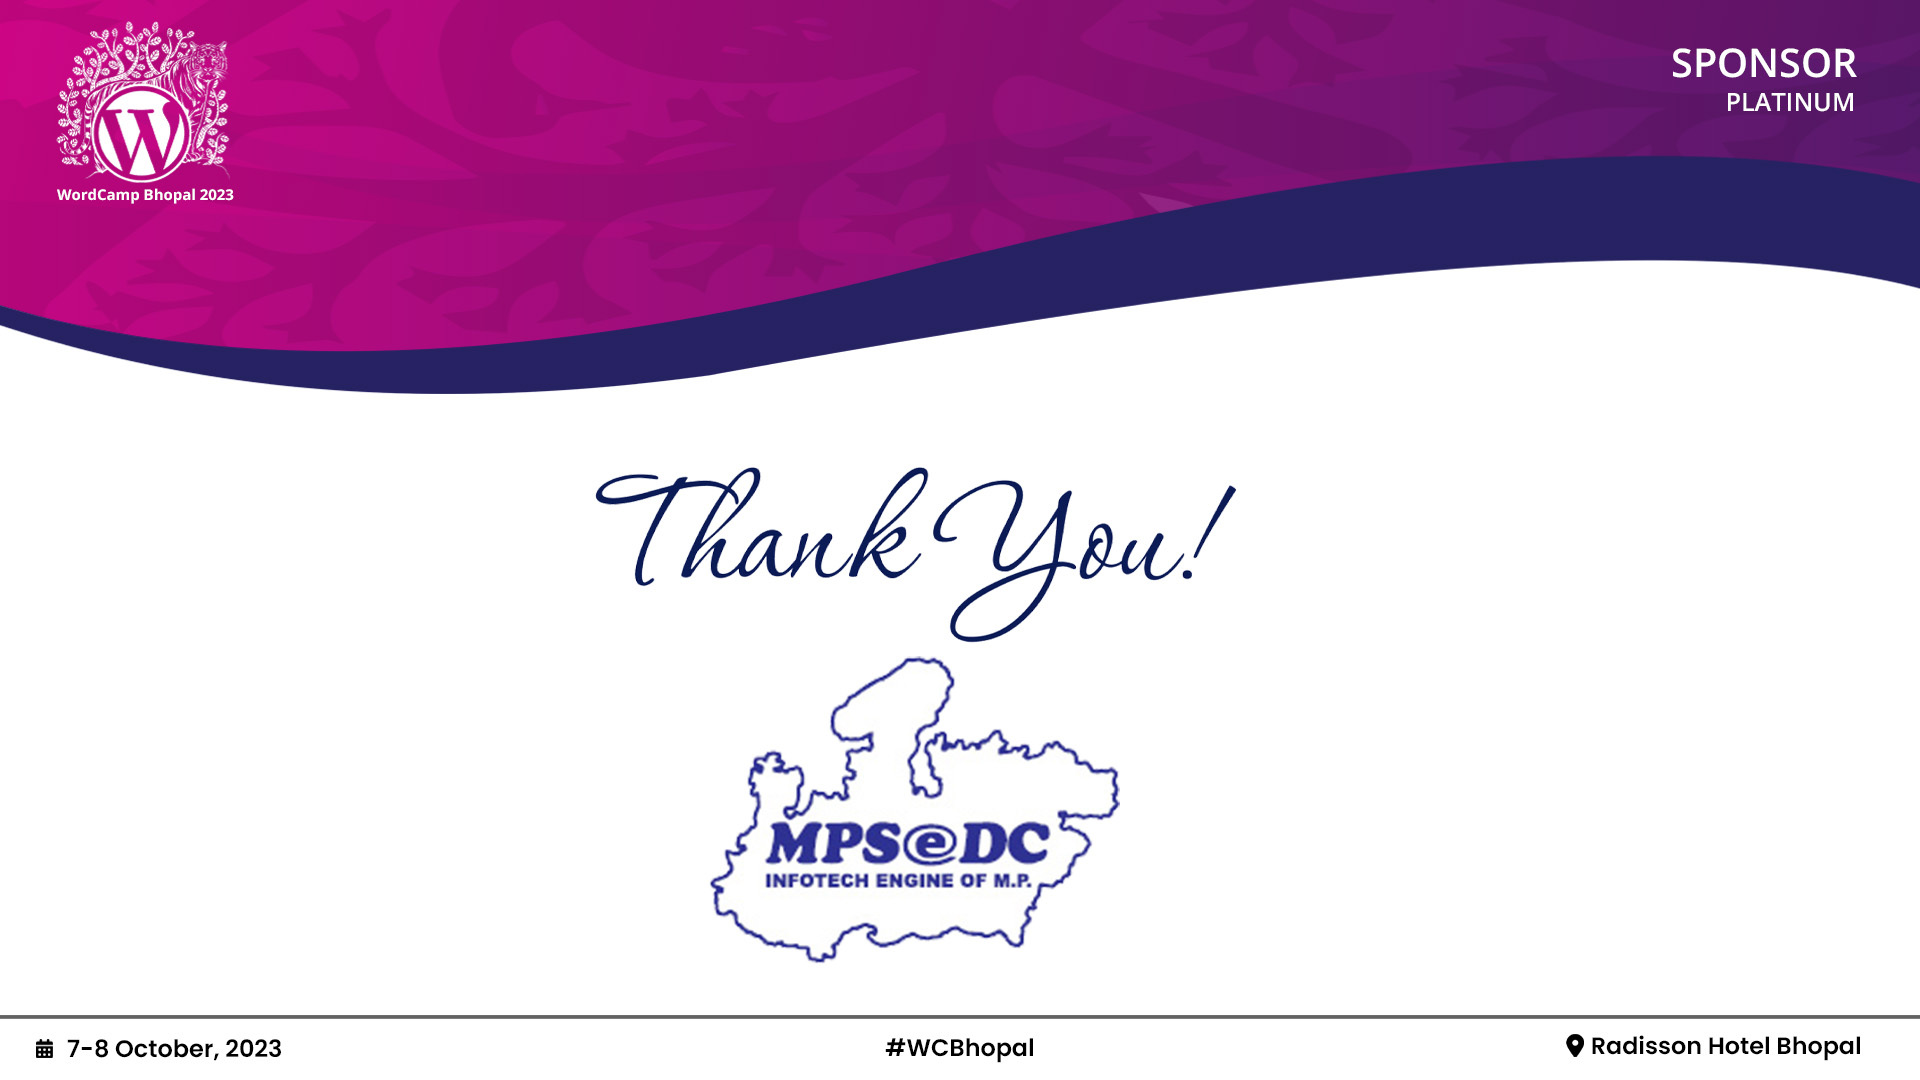 MPSEDC Joins us as a Platinum Sponsor!